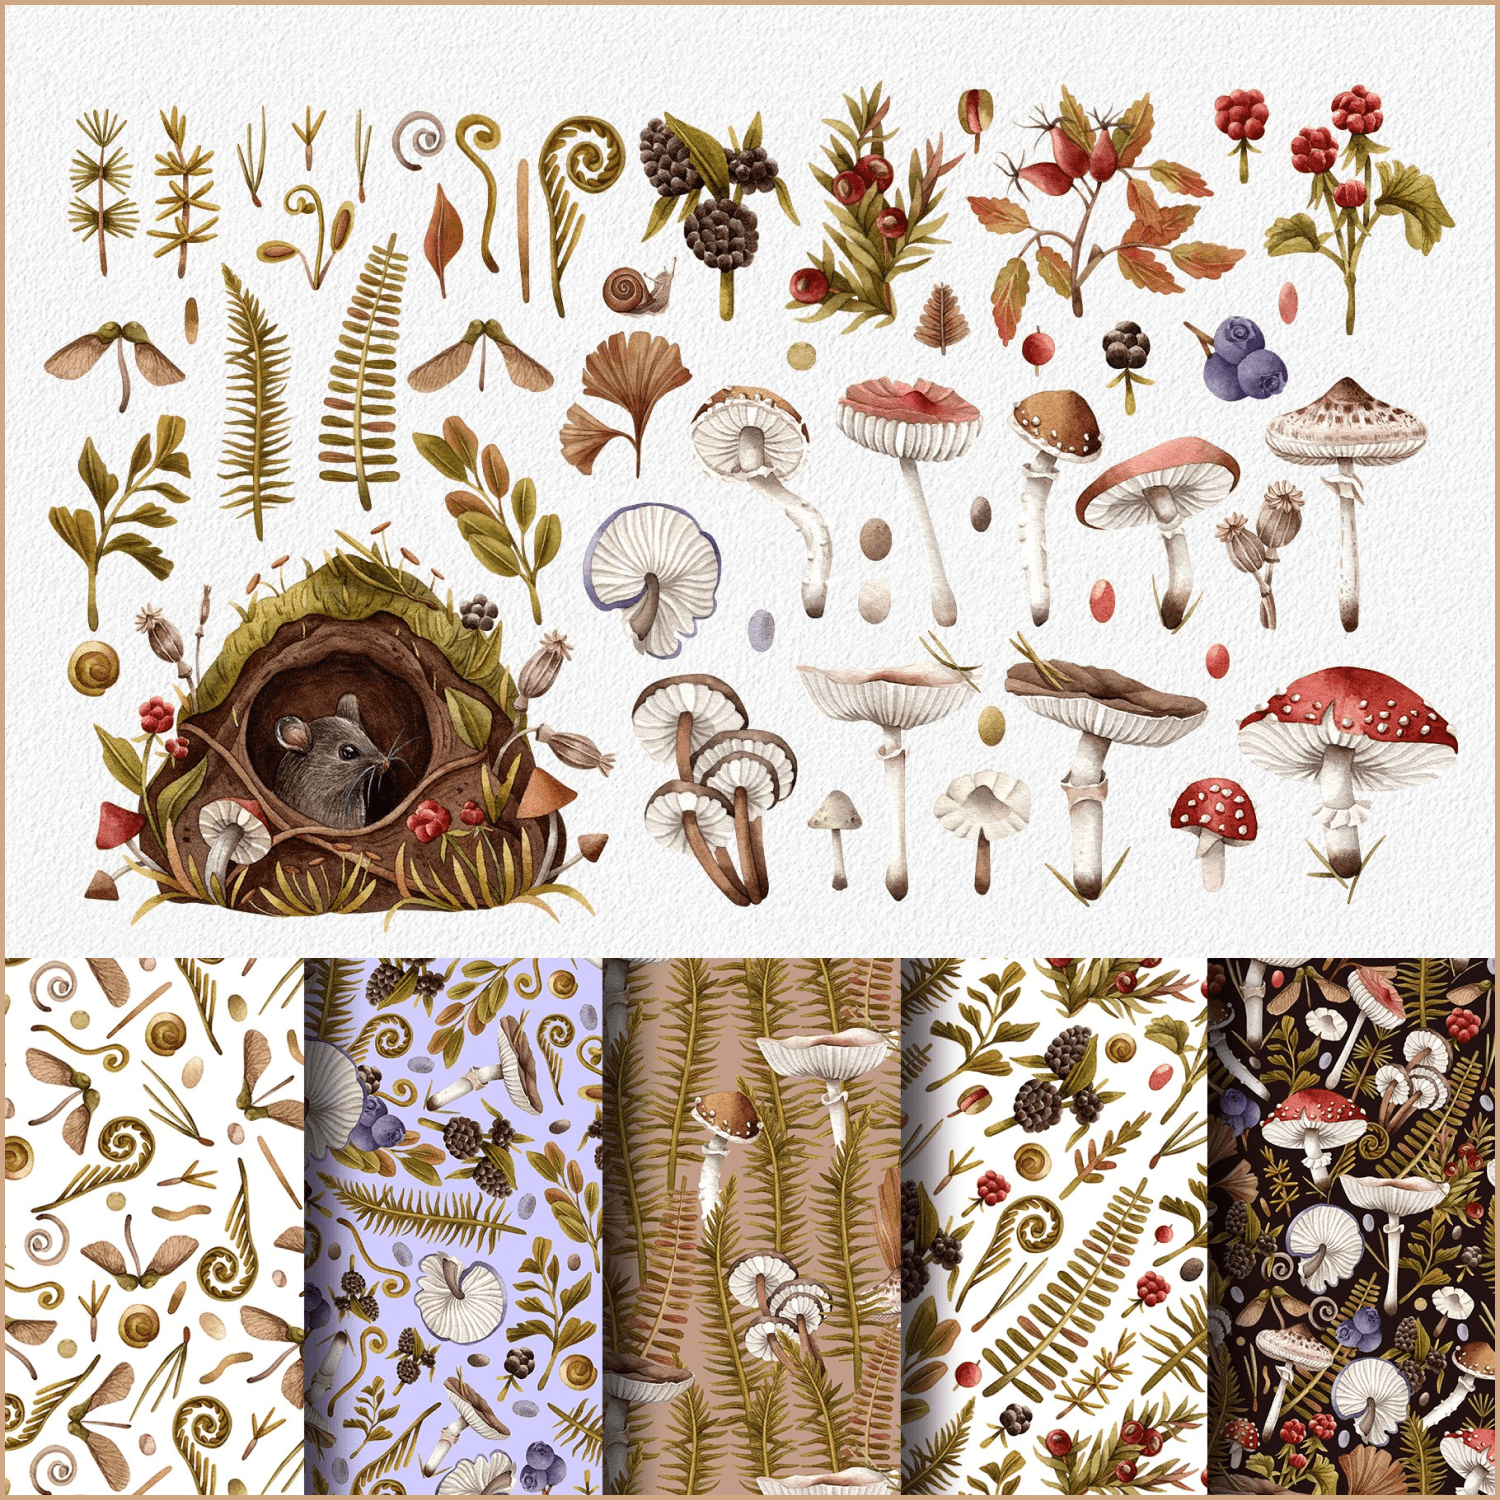 Botanical watercolor mushrooms created by Slovovslovo.